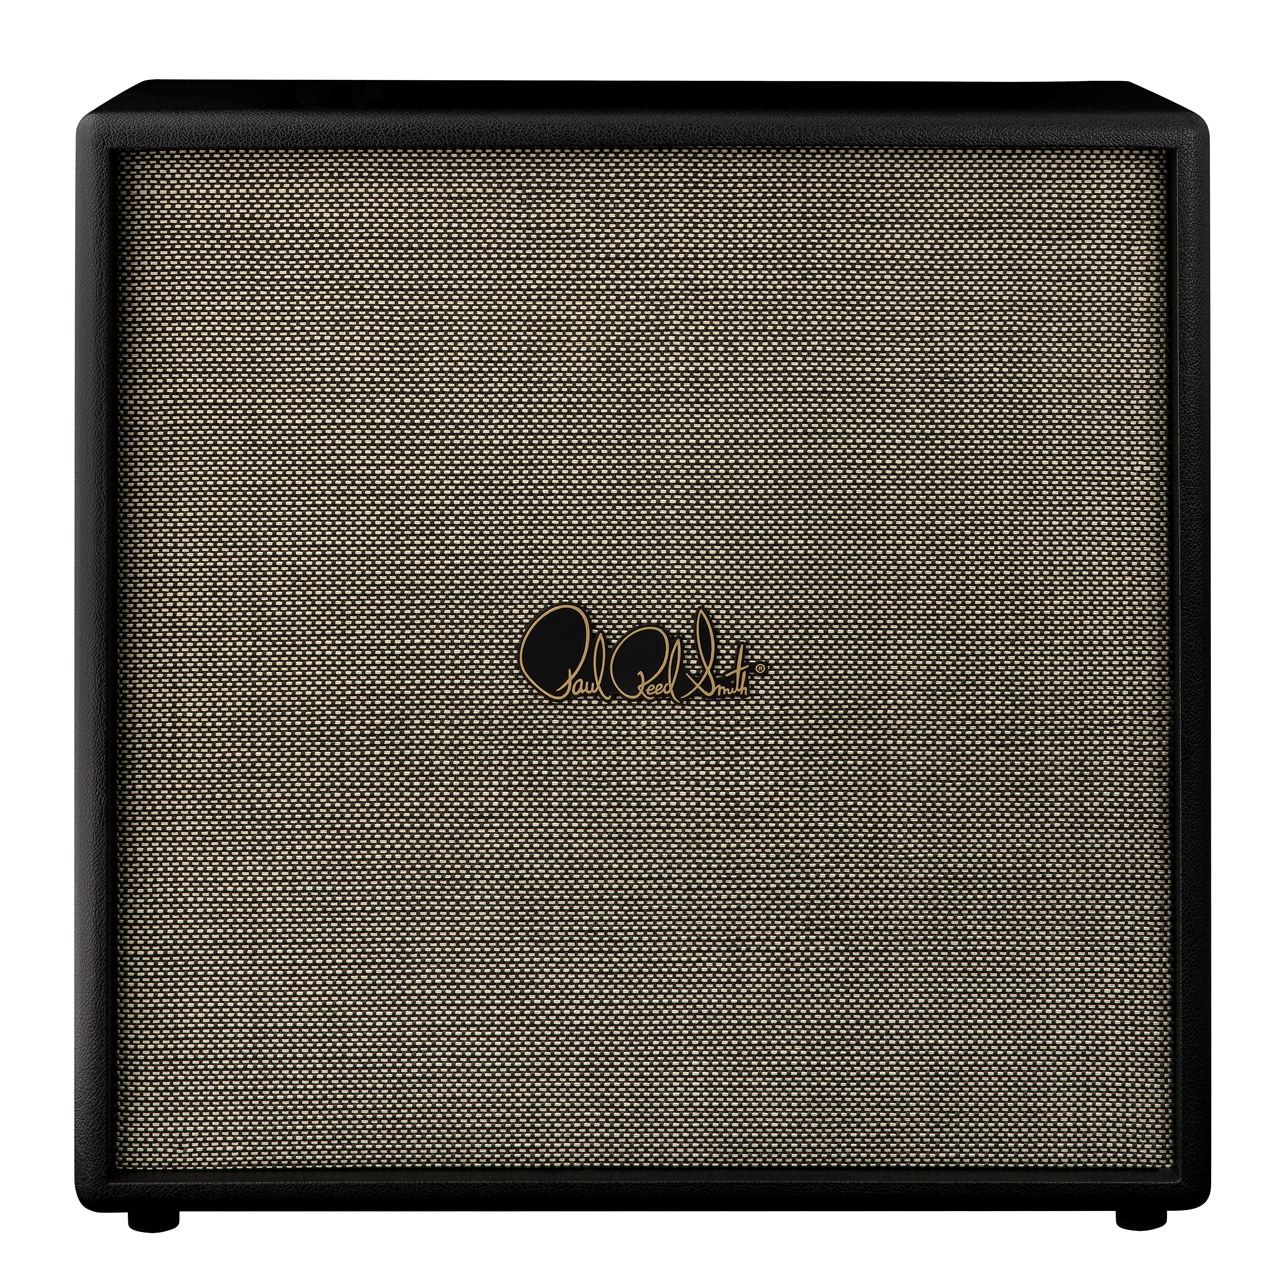 PRS HDRX 4x12 Cabinet - passend zu HDRX 50/100 'Hendrix' Amps